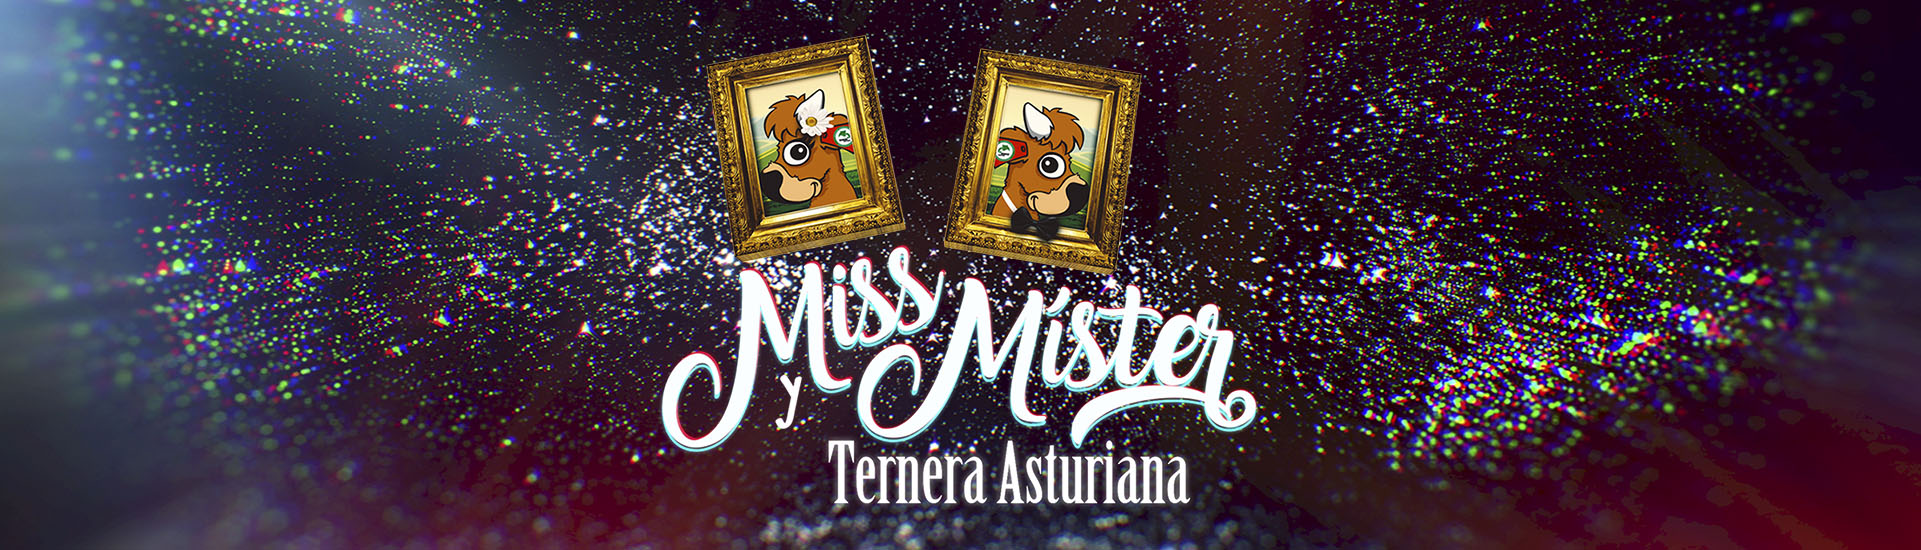 Política de Cookies | Miss y Mister Ternera Asturiana